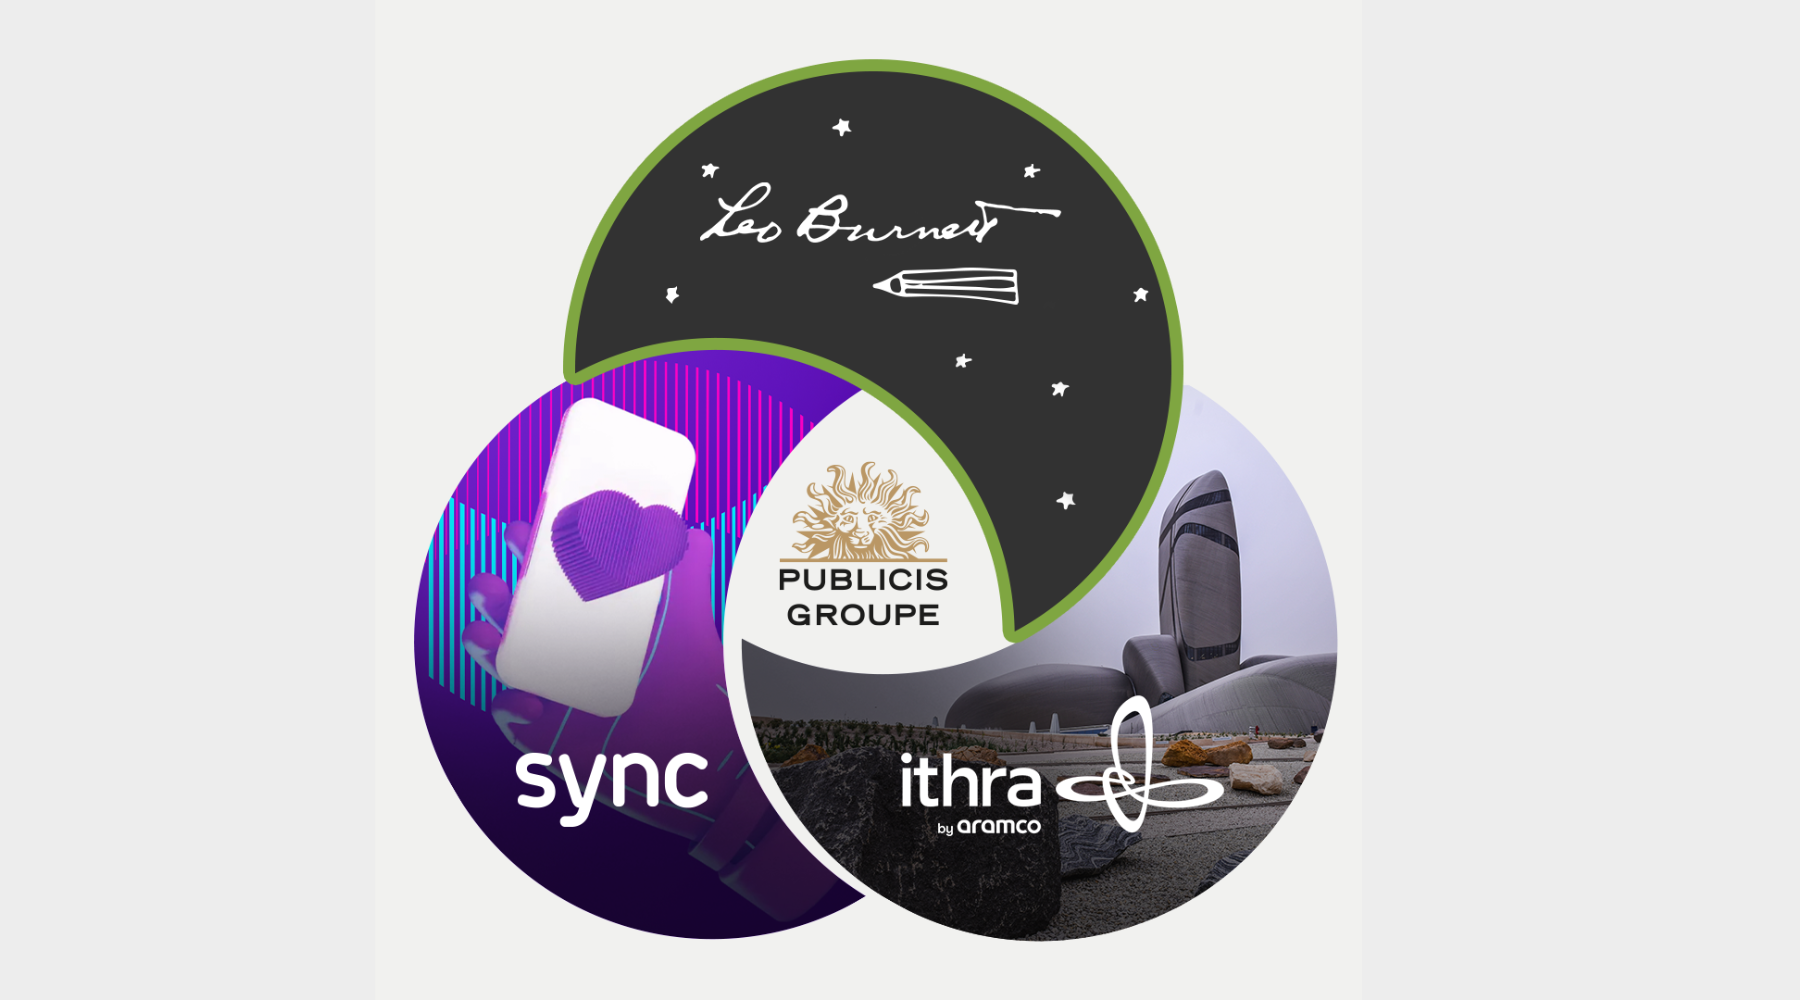 Leo Burnett Riyadh Wins Social Media & Digital Services Accounts for Ithra & Sync